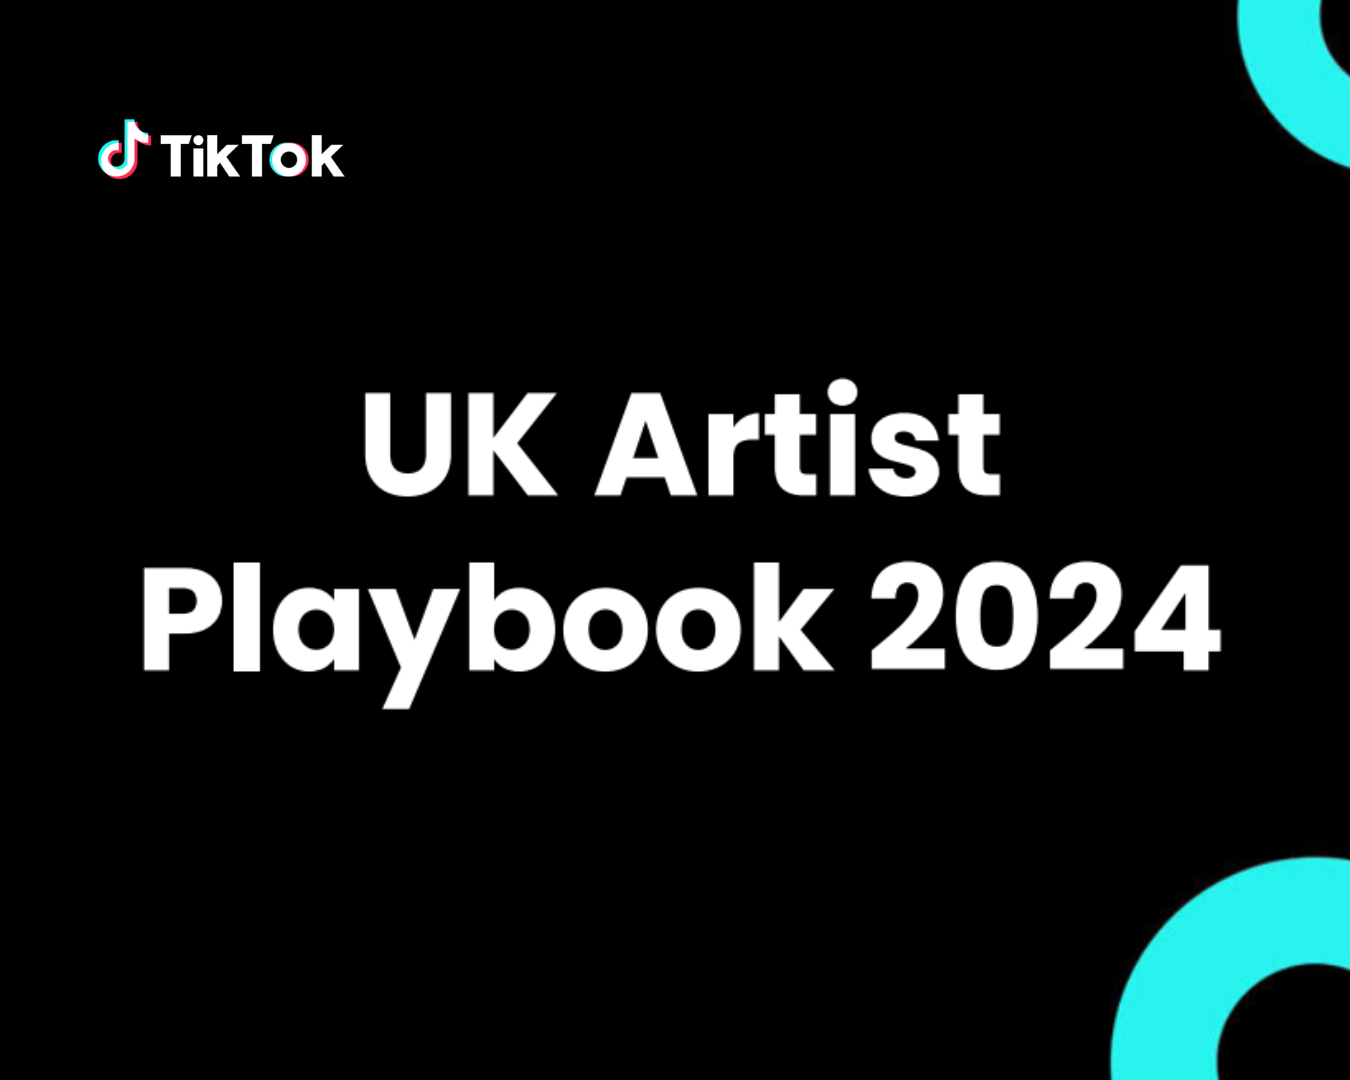 TikTok UK Artist Playbook 2024